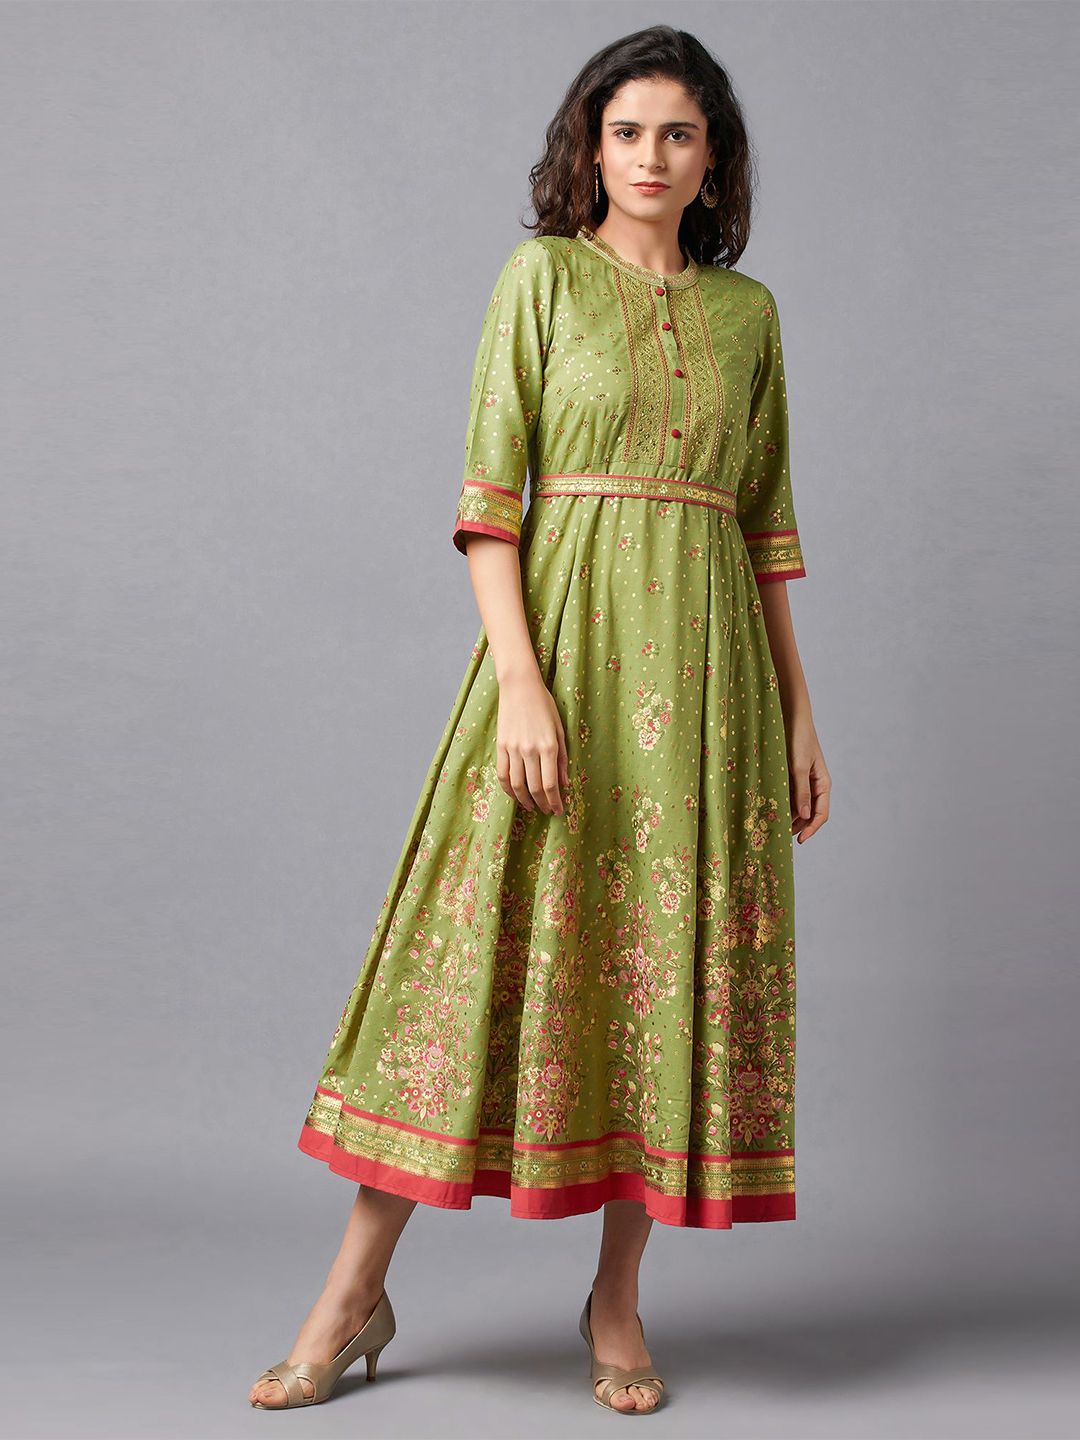 AURELIA Green & Pink Ethnic Motifs Ethnic A-Line Midi Dress Price in India